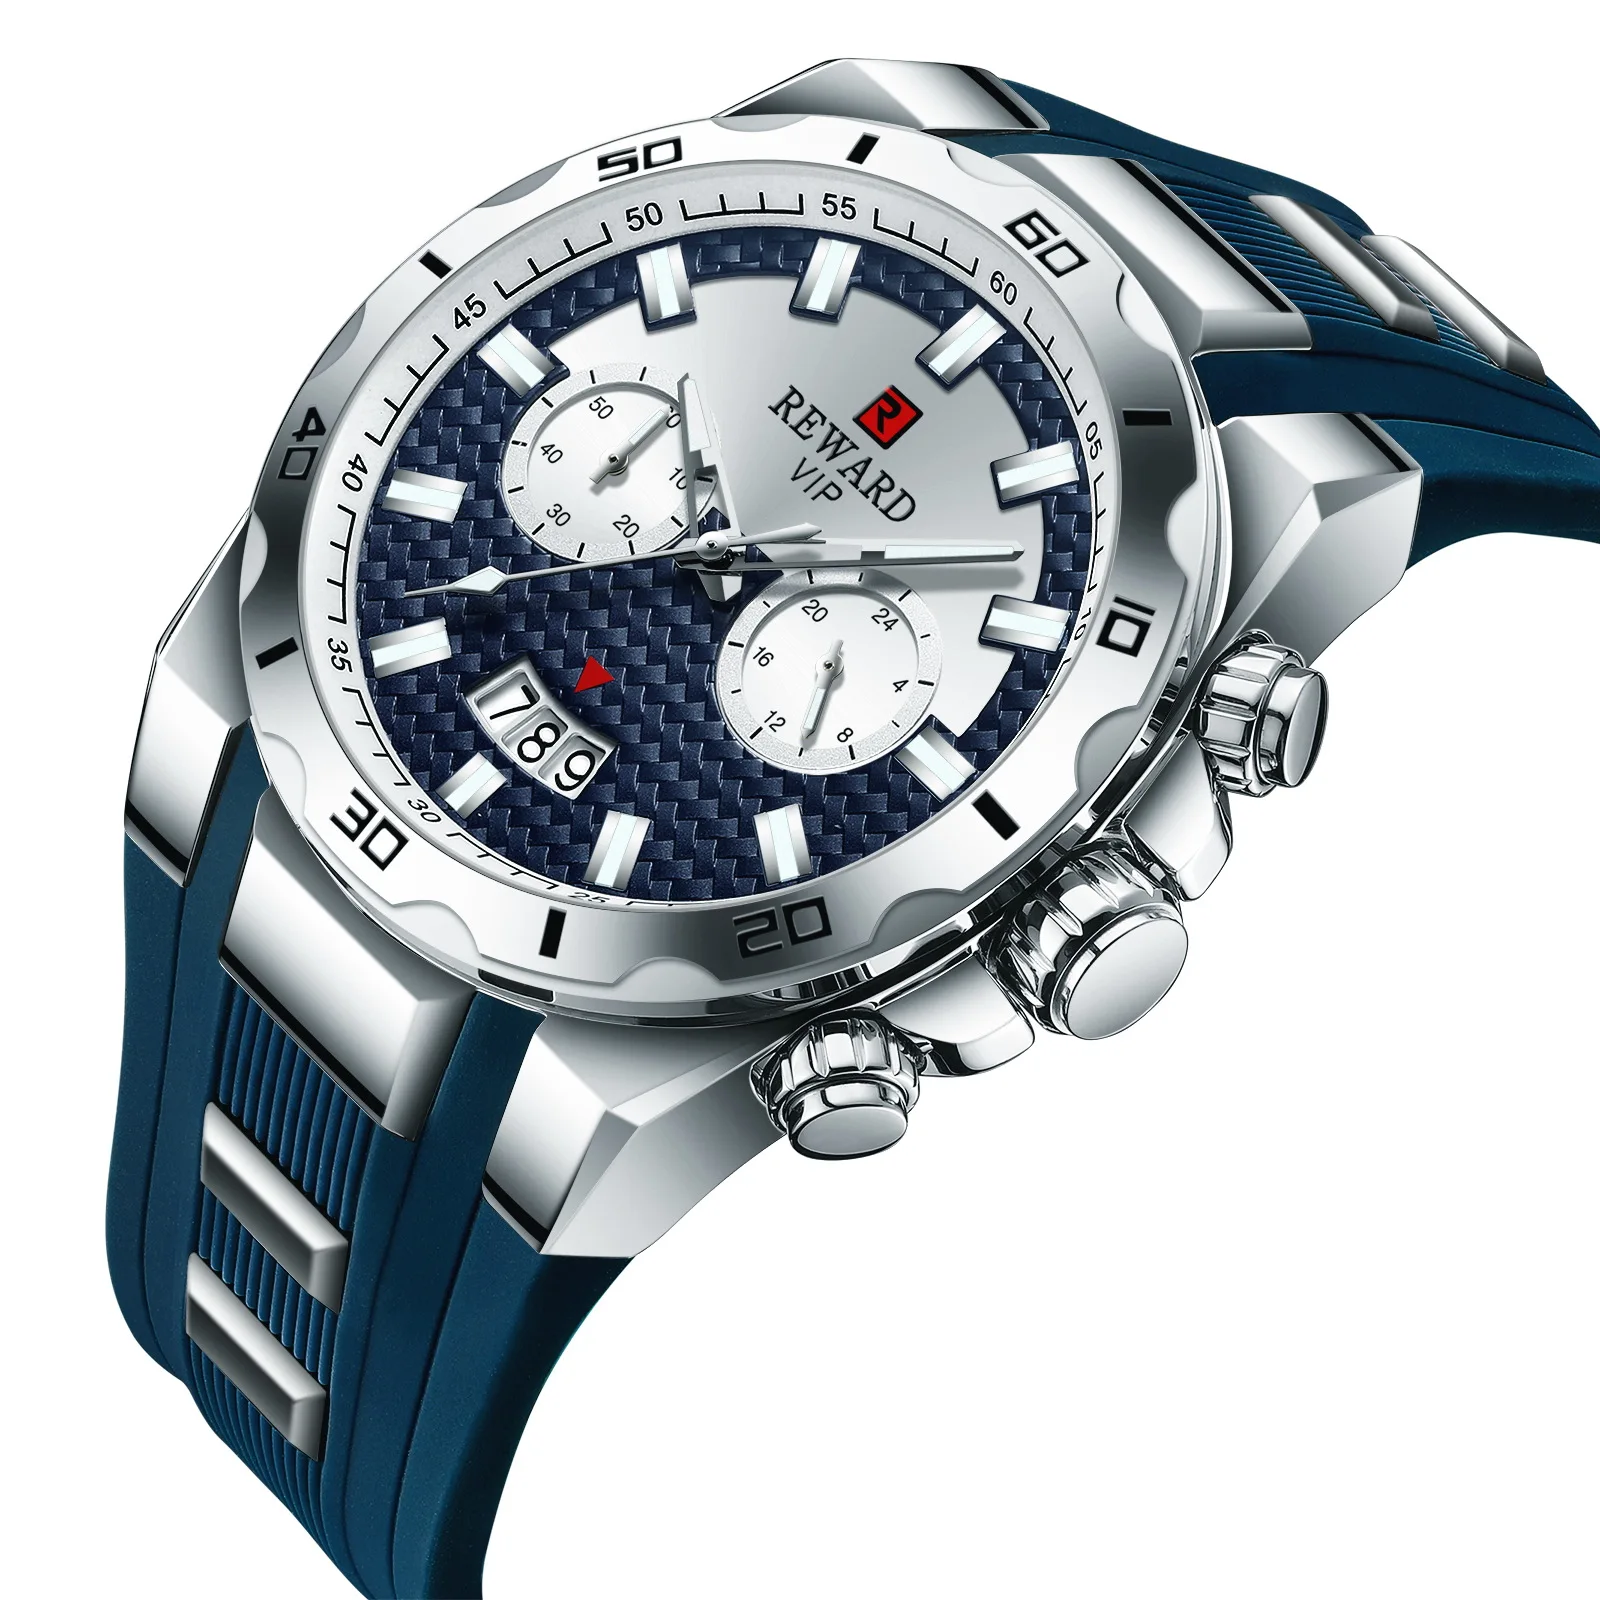 

REWARD RD83008M Sport Waterproof Luxury Chronograph Quartz Top Brand Strap Mens Watch Blue Dial Date, 4 colors